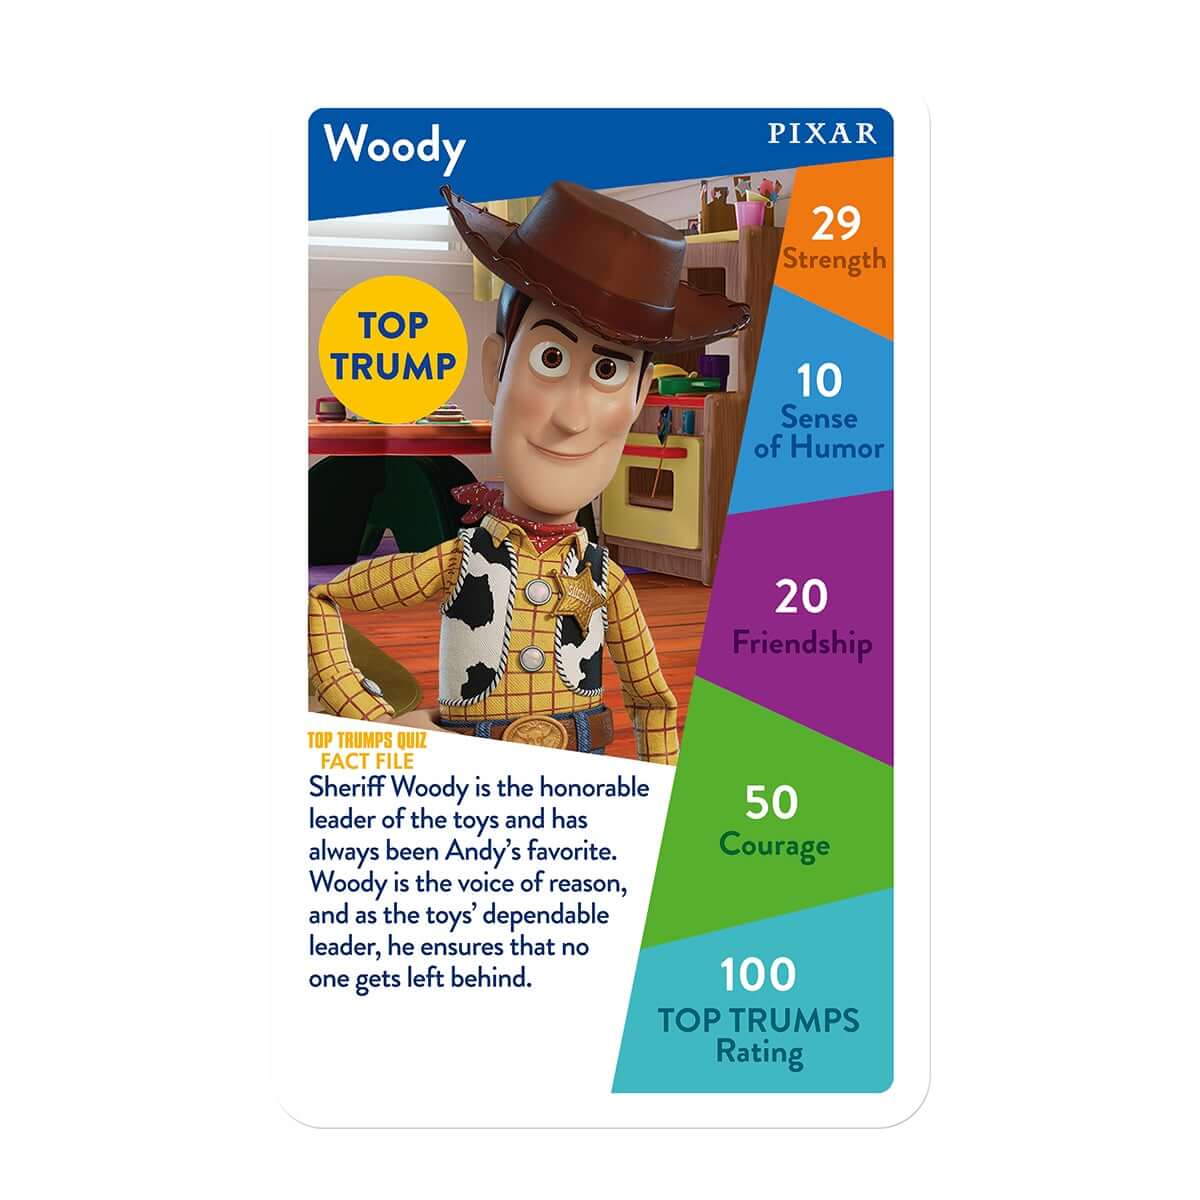 Disney Pixar Top Trumps Card Game